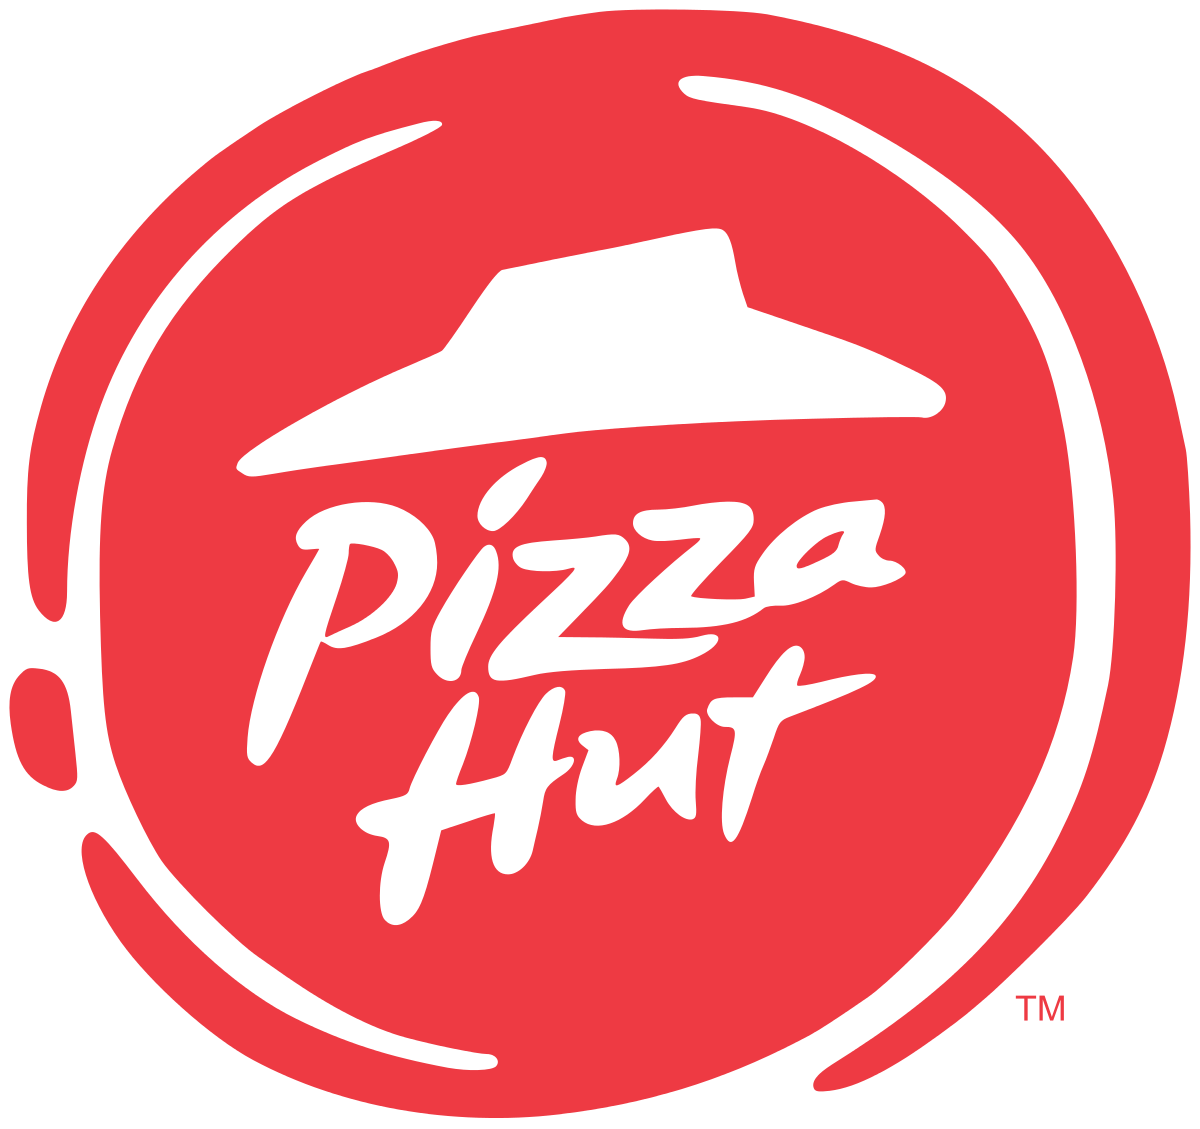 Red Sun TT Logo - Pizza Hut